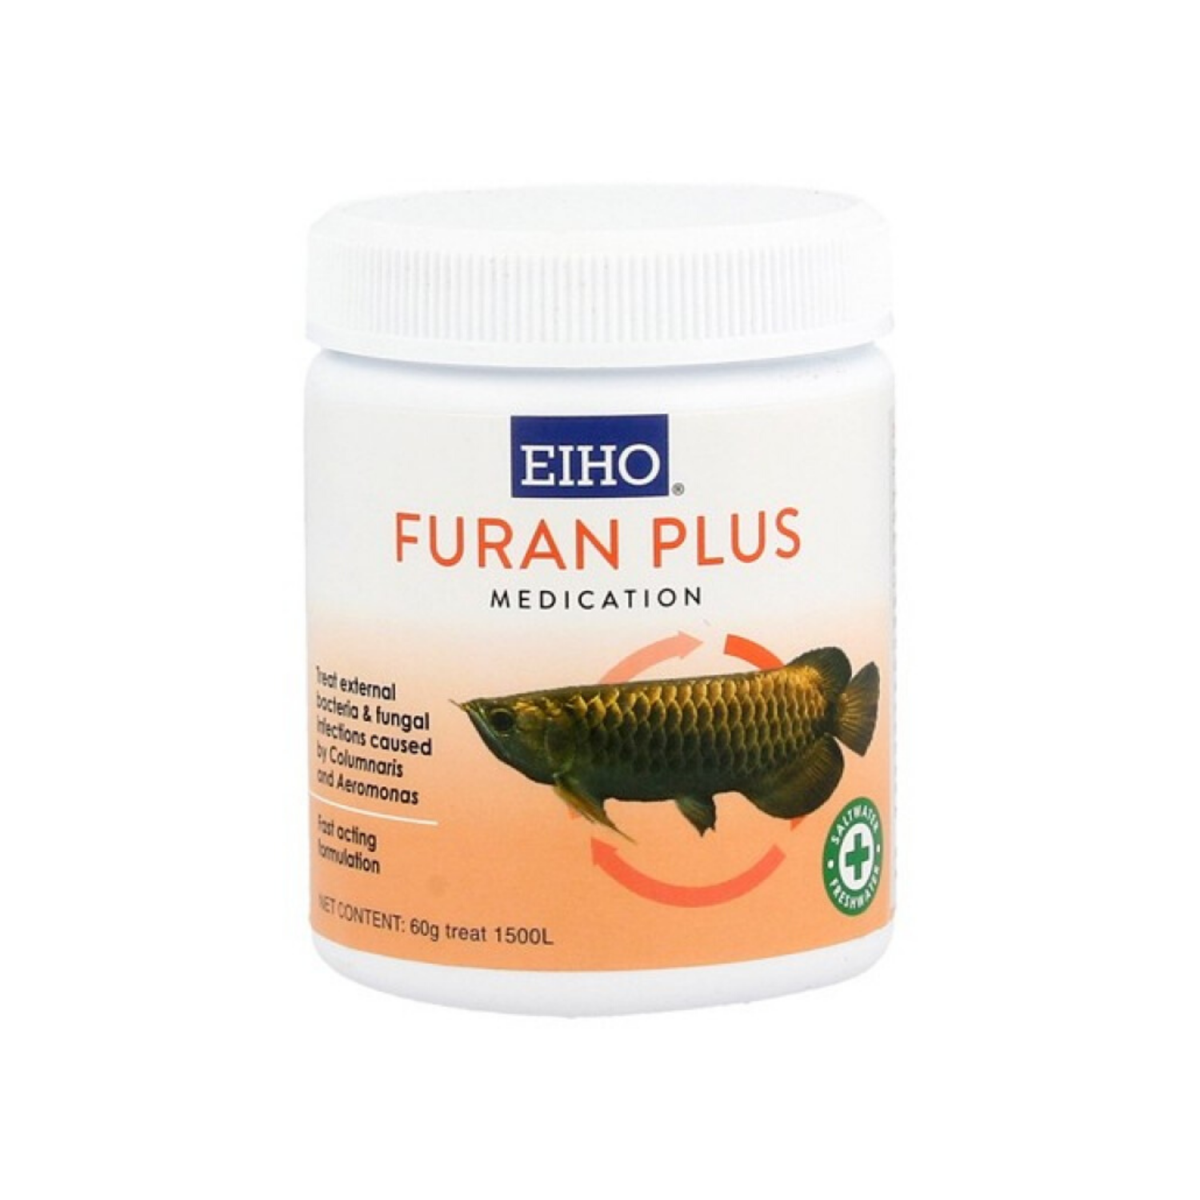 EIHO Furan Plus